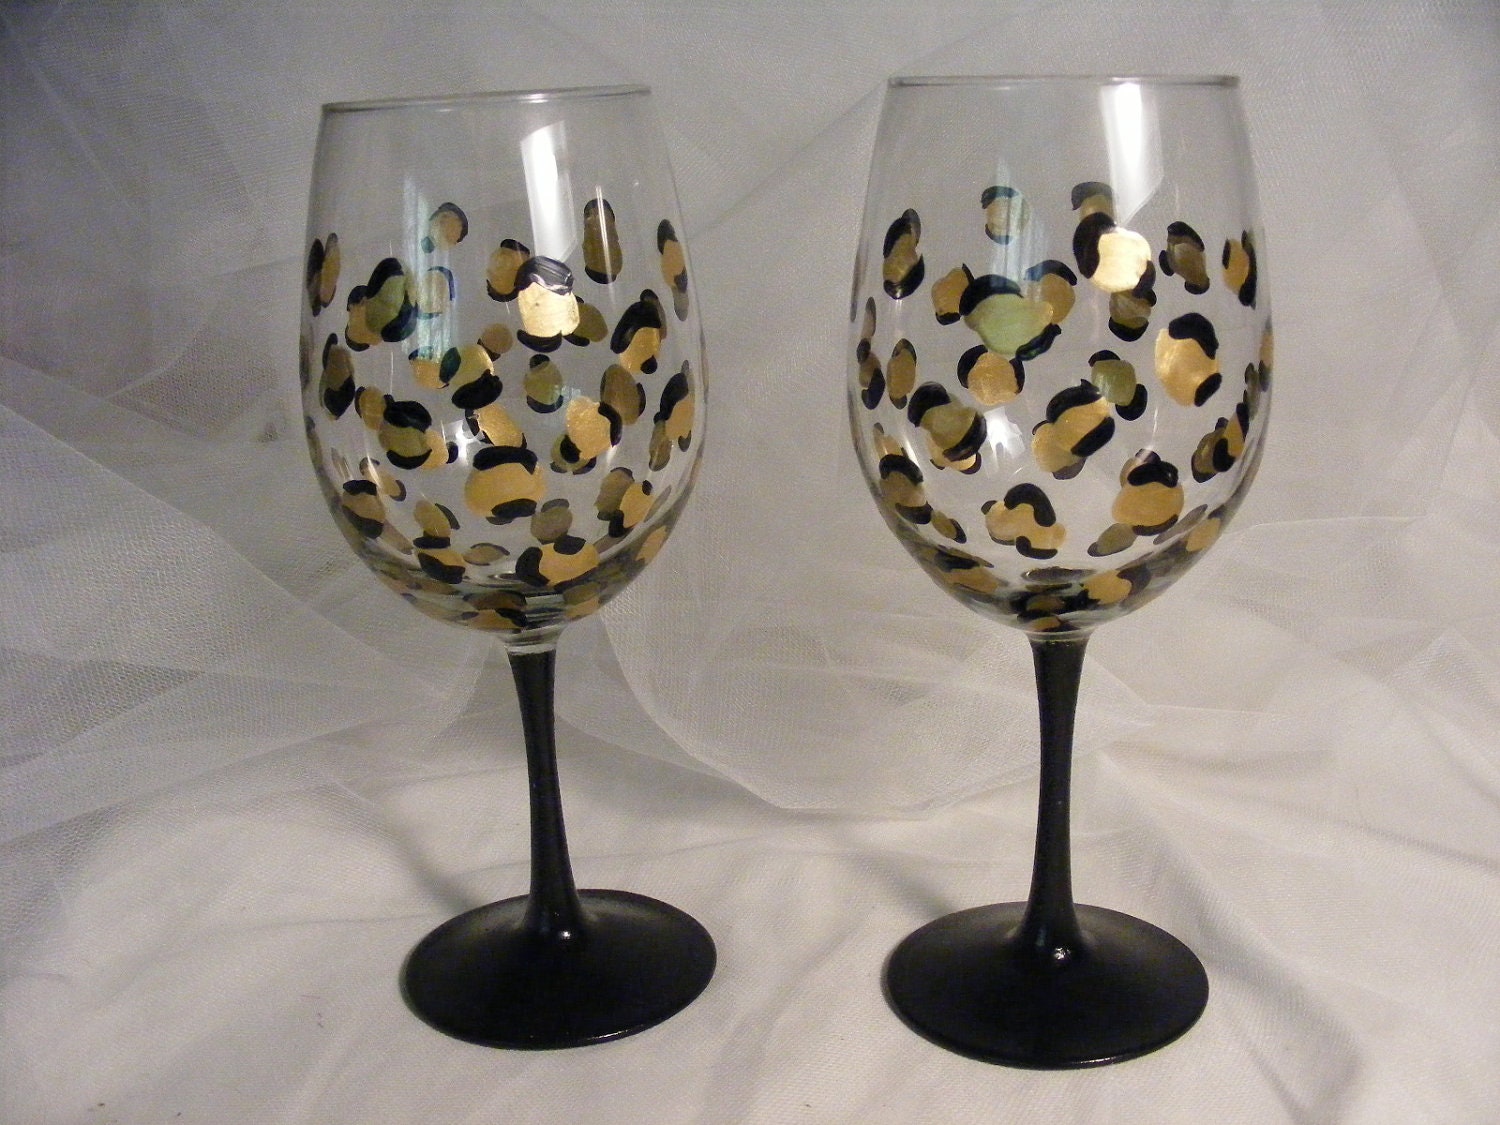 Bottom's Up Wine Glass Deco Leopard